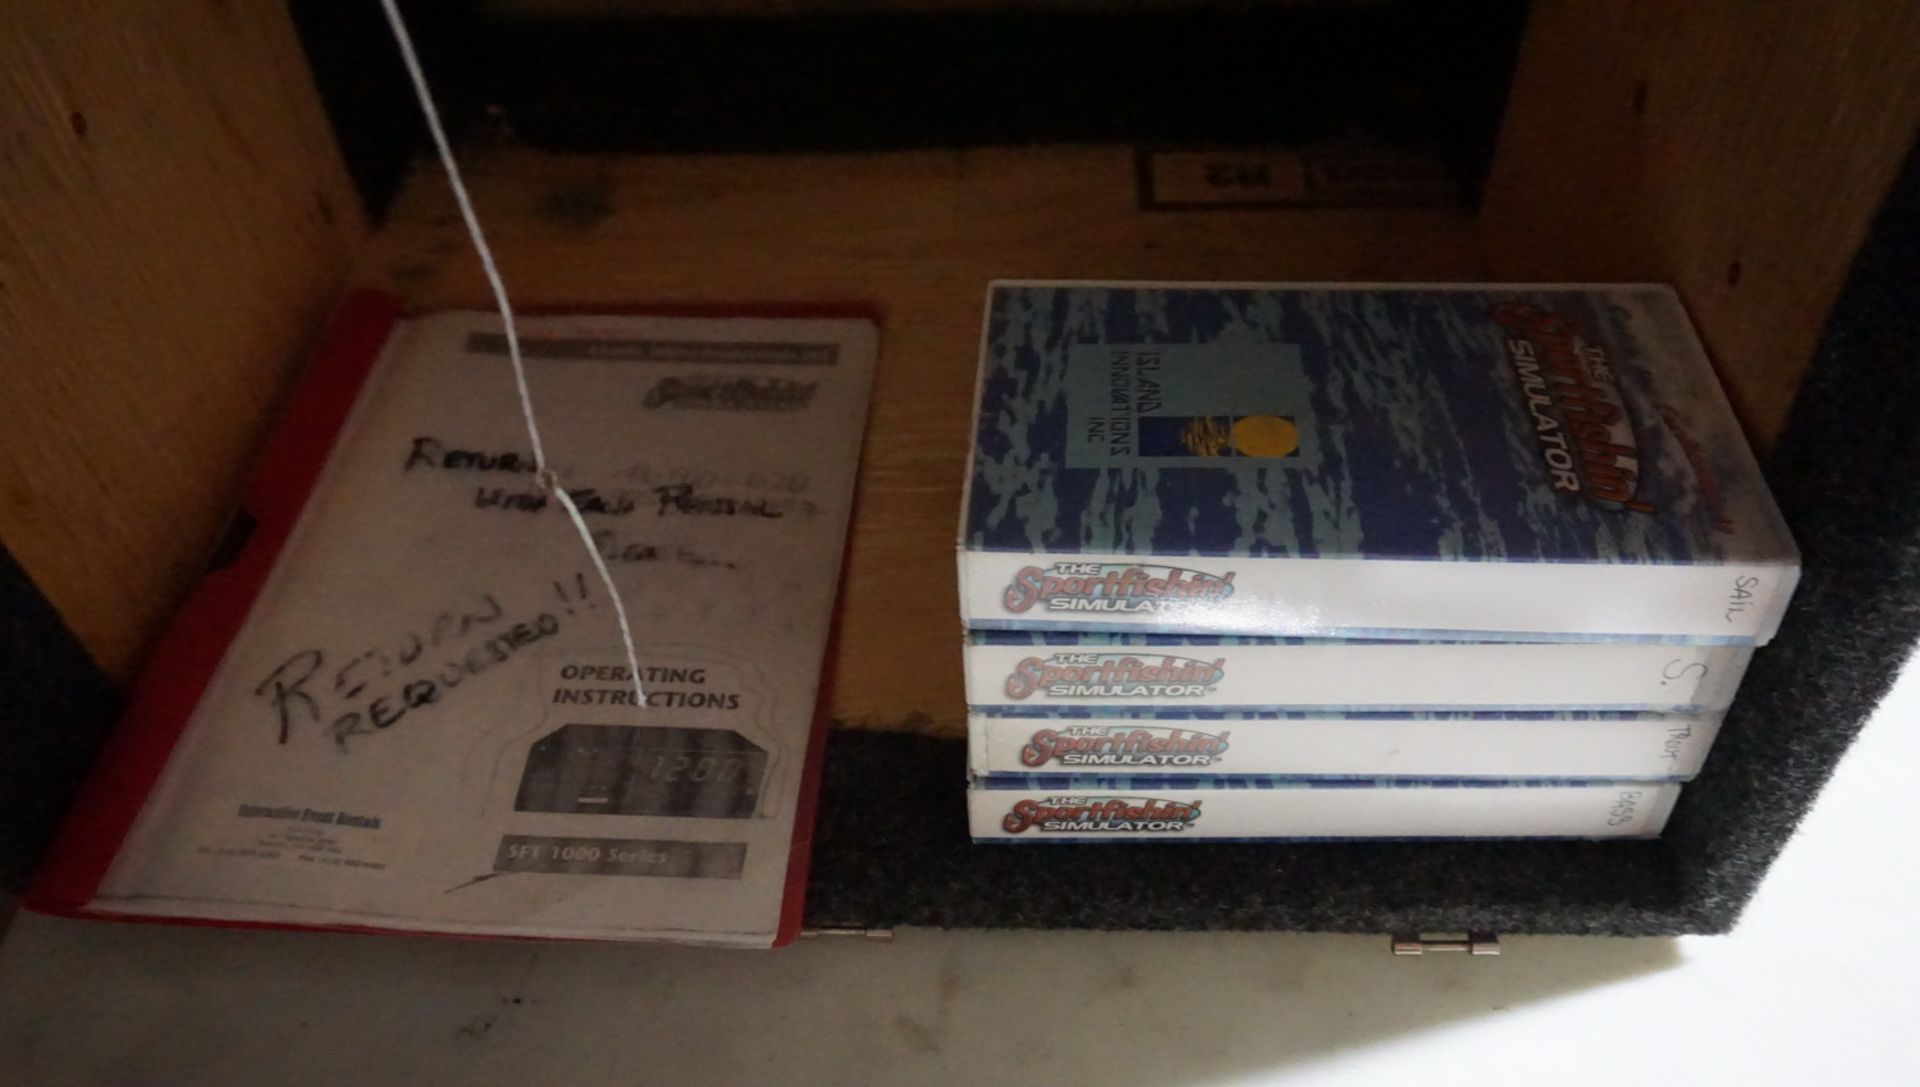 THE SPORT FISHIN SIMULATOR C/W FISHING ROD, VHS TAPES, & TRAVEL CASE - Image 3 of 3